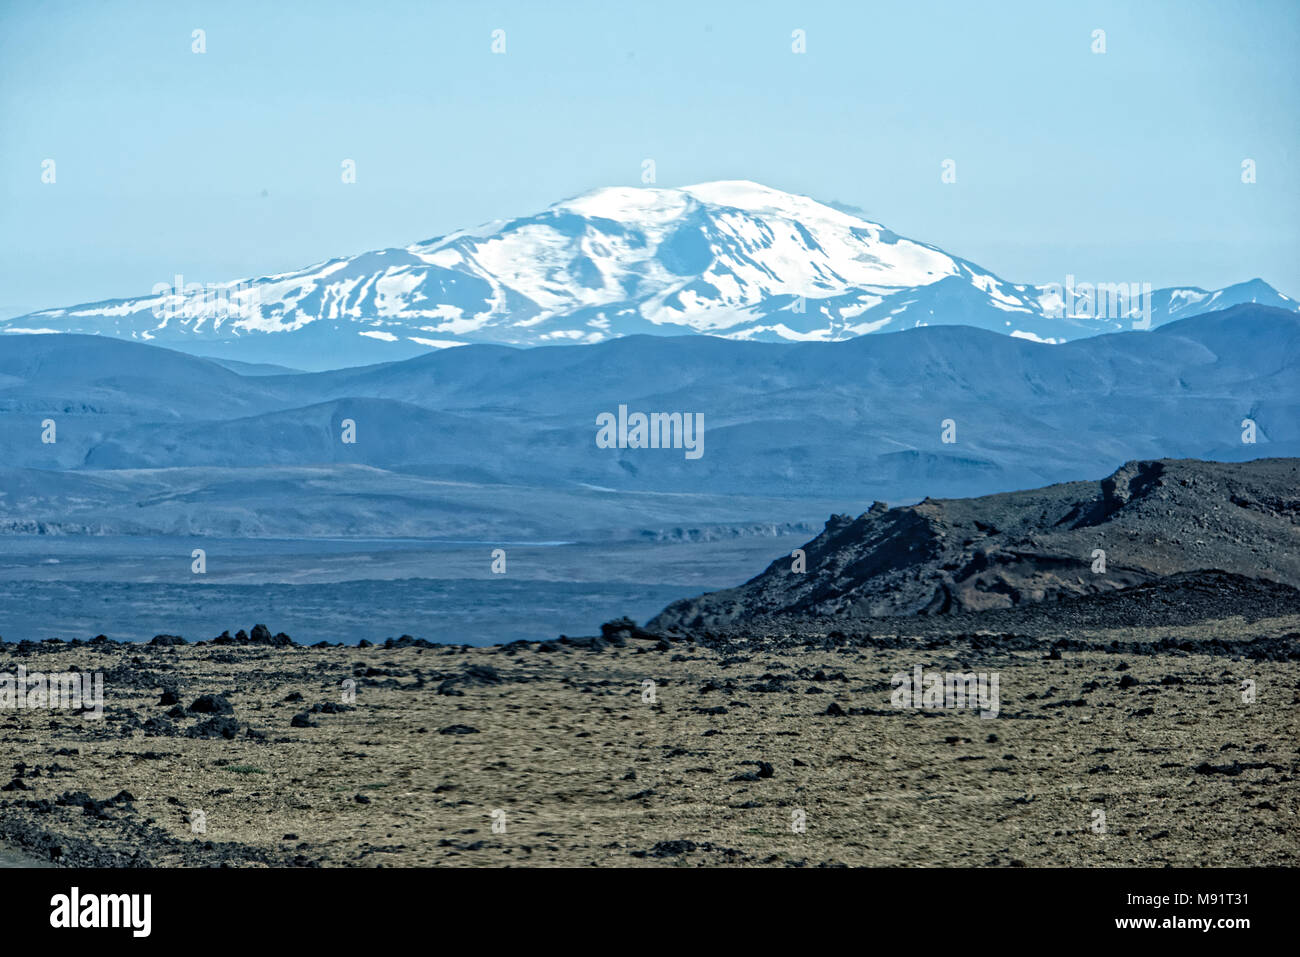 Herdubreid mountain (1682m) in the Odadahraun region of northeast Iceland. Stock Photo